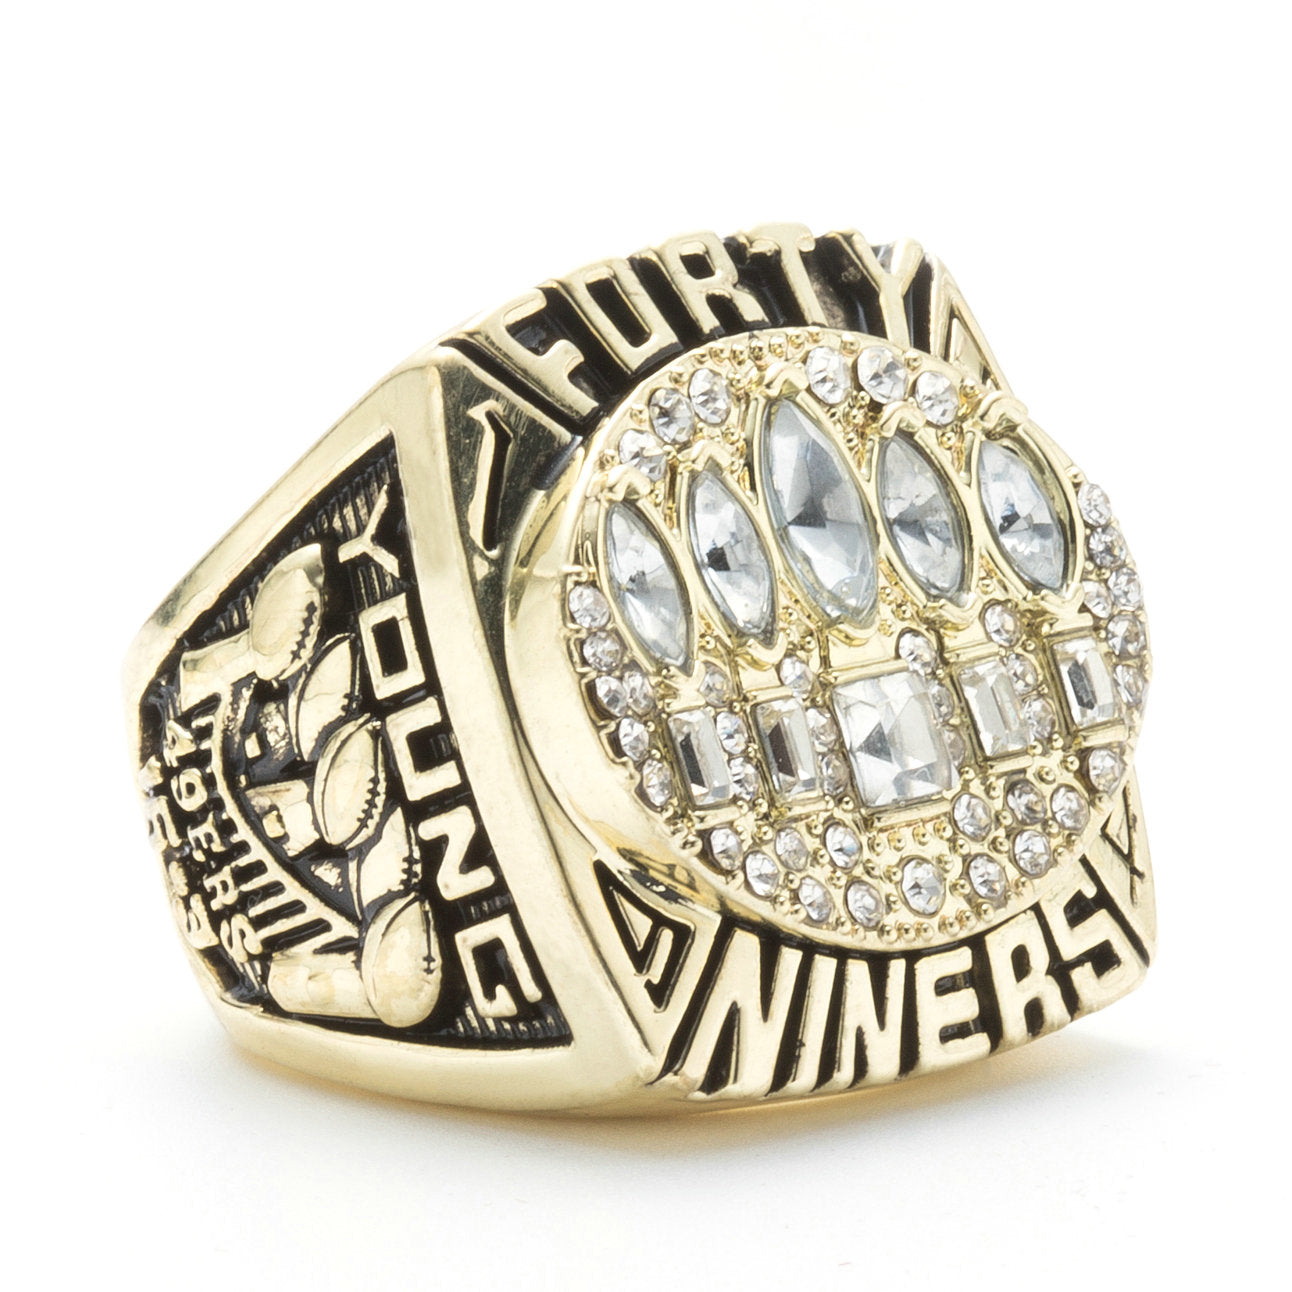 49ers super bowl replica rings for sale